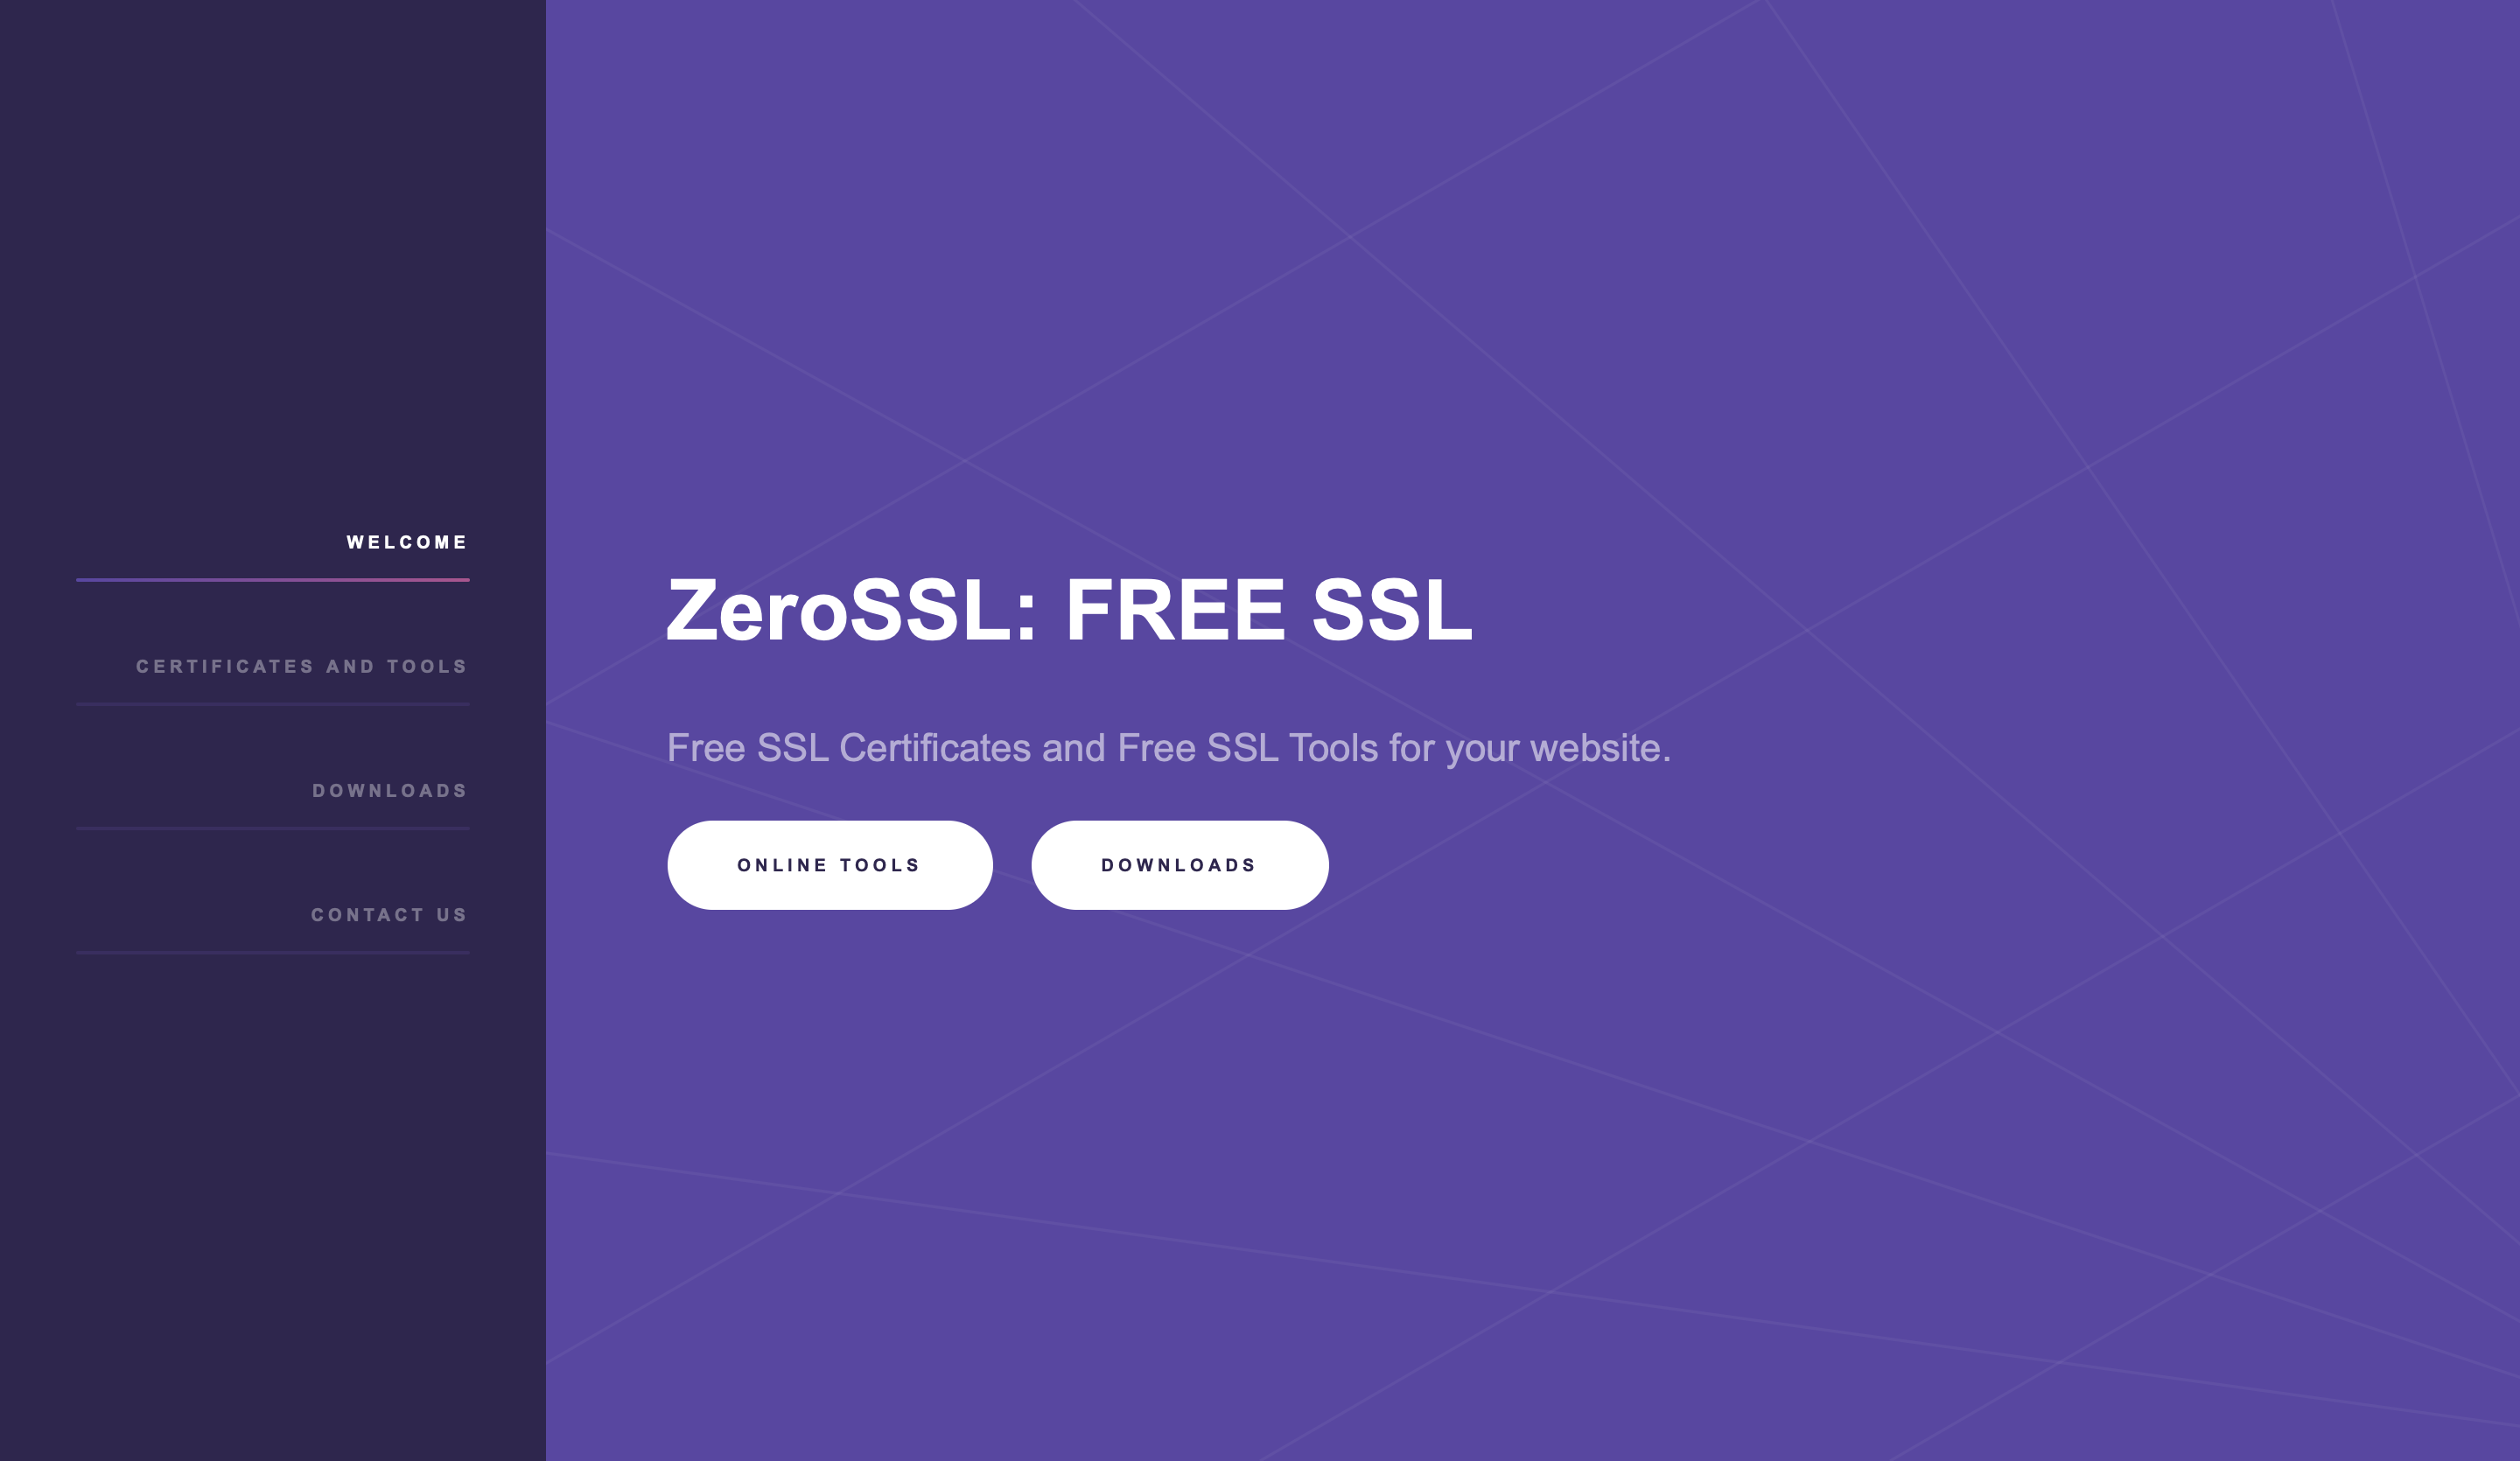 ZeroSSL is among the best free SSL provider